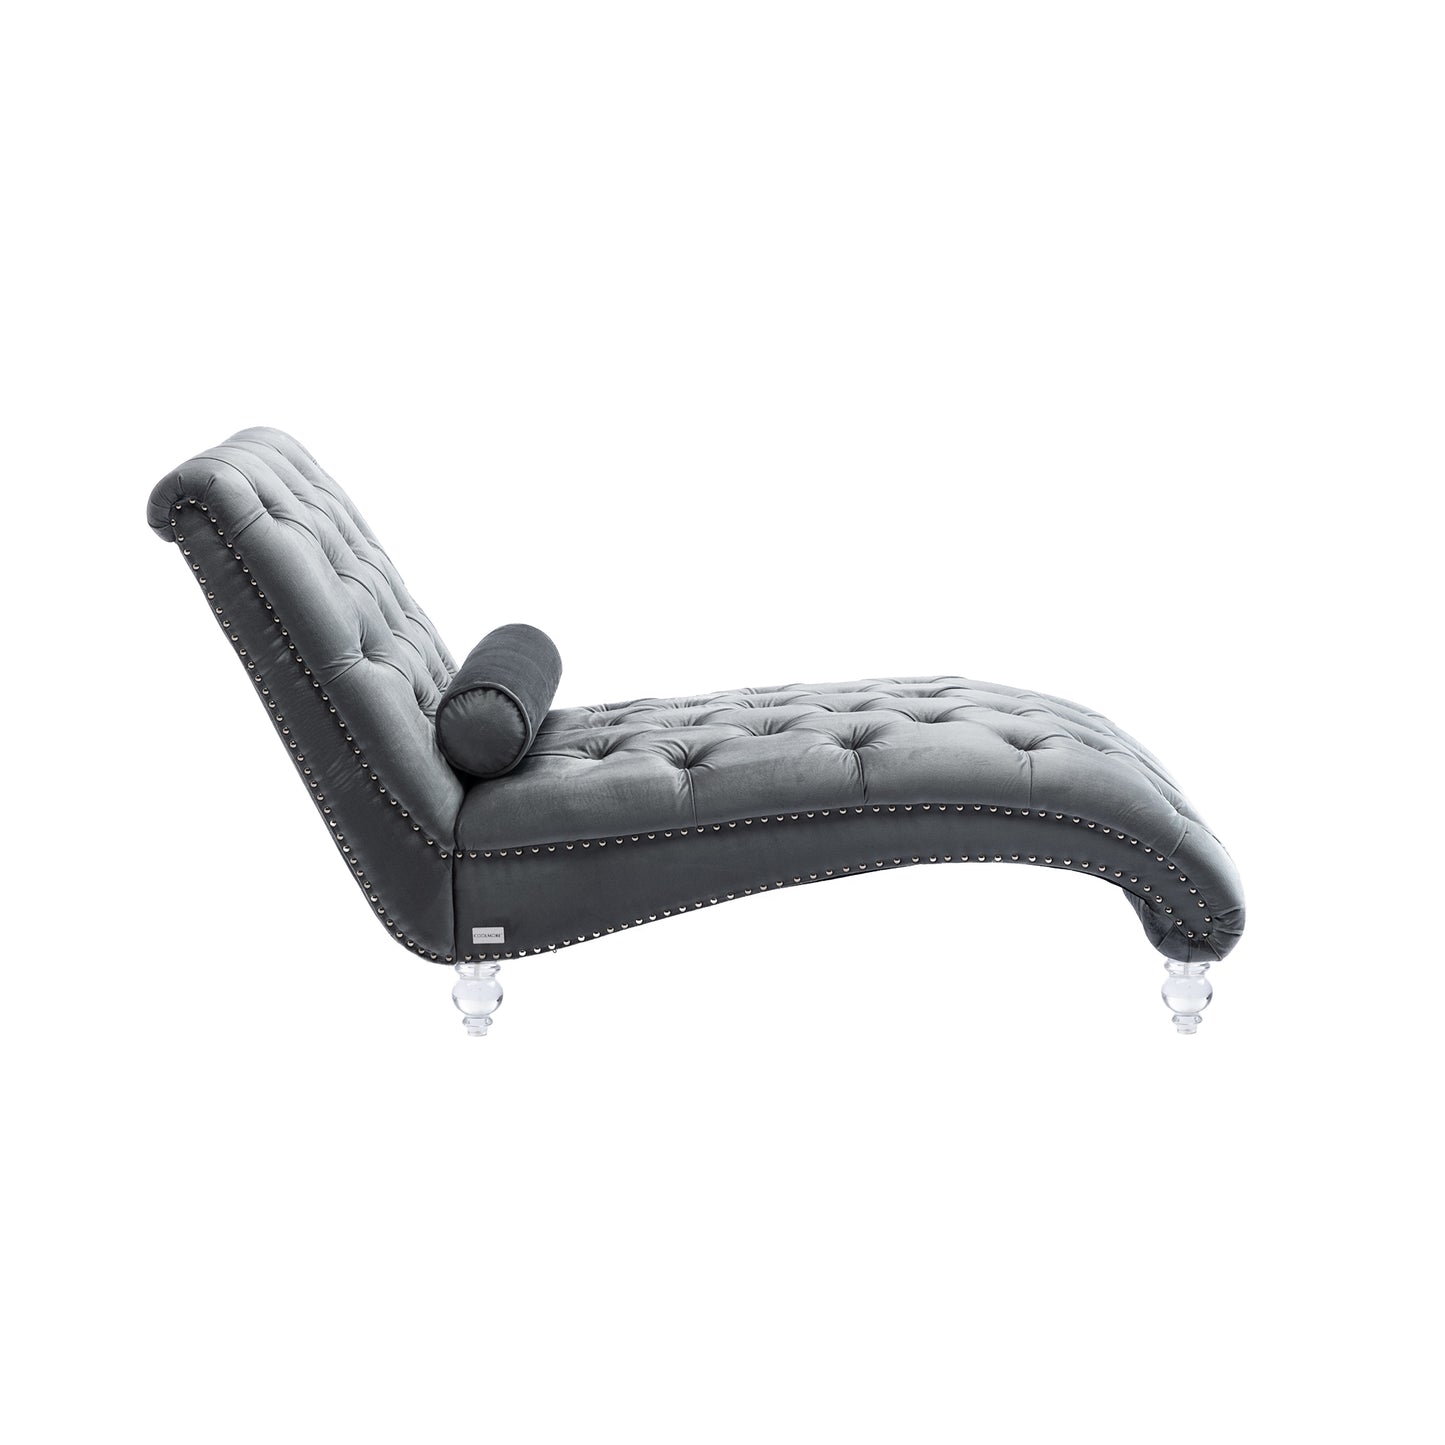 COOMORE   Leisure concubine sofa  with  acrylic  feet